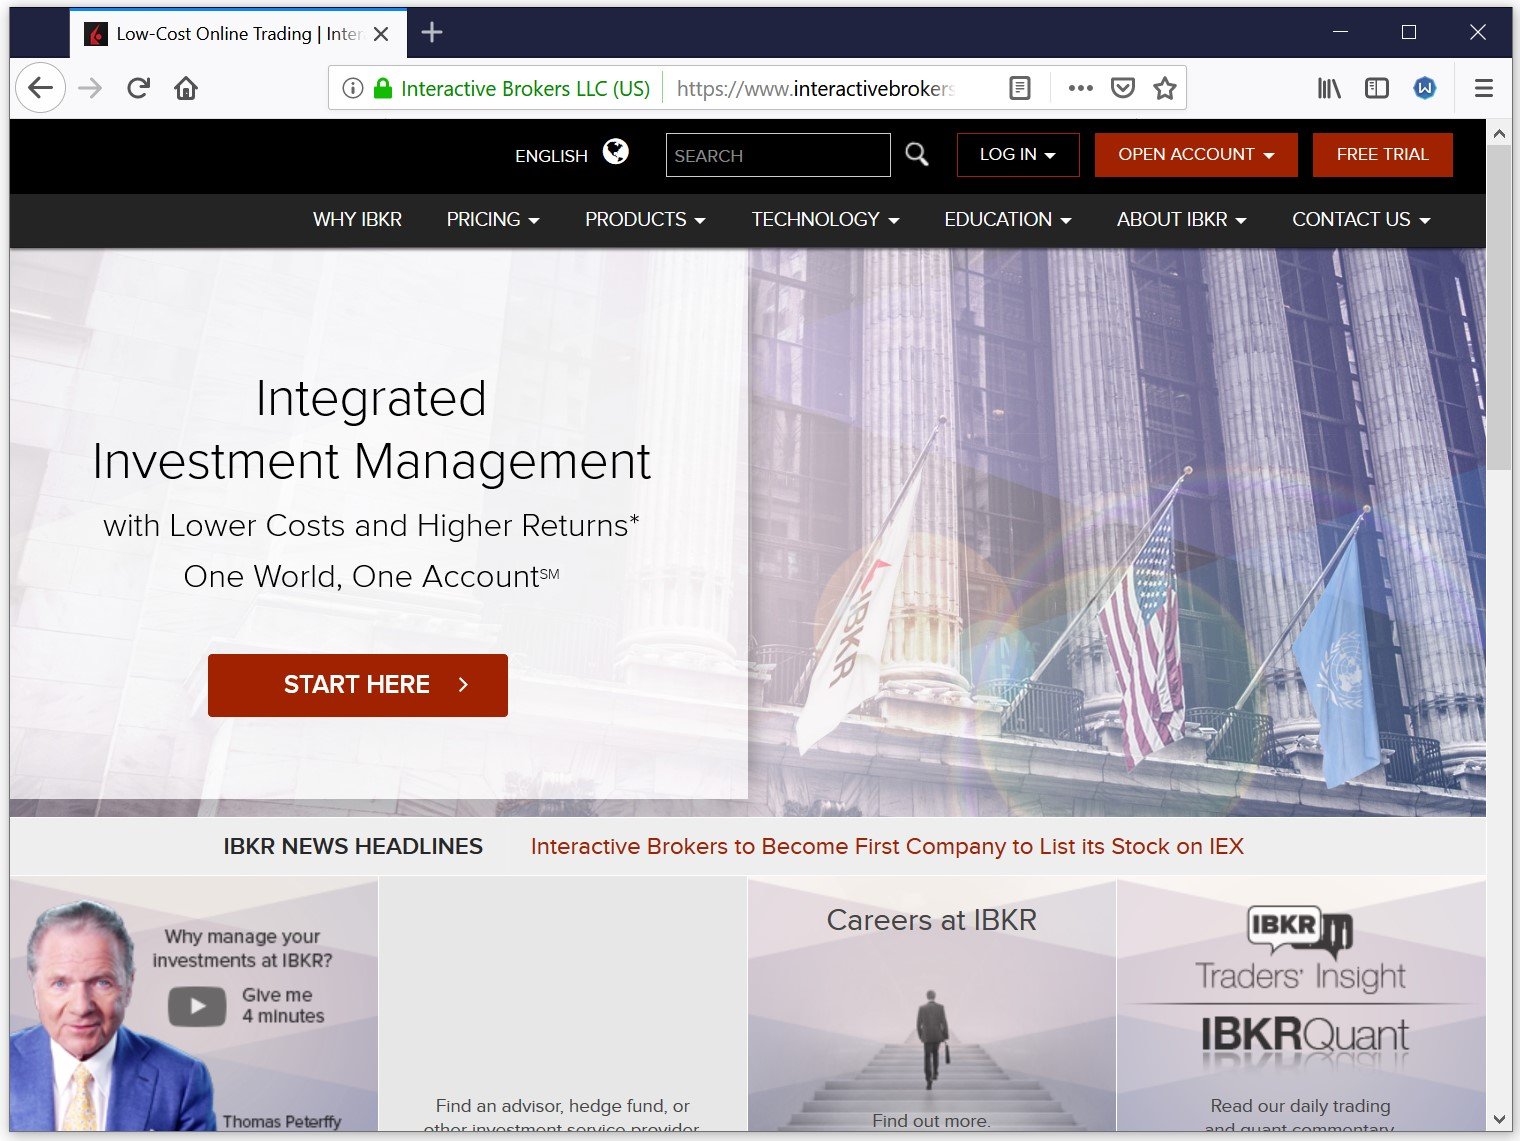 Interactive brokers homepage screenshot